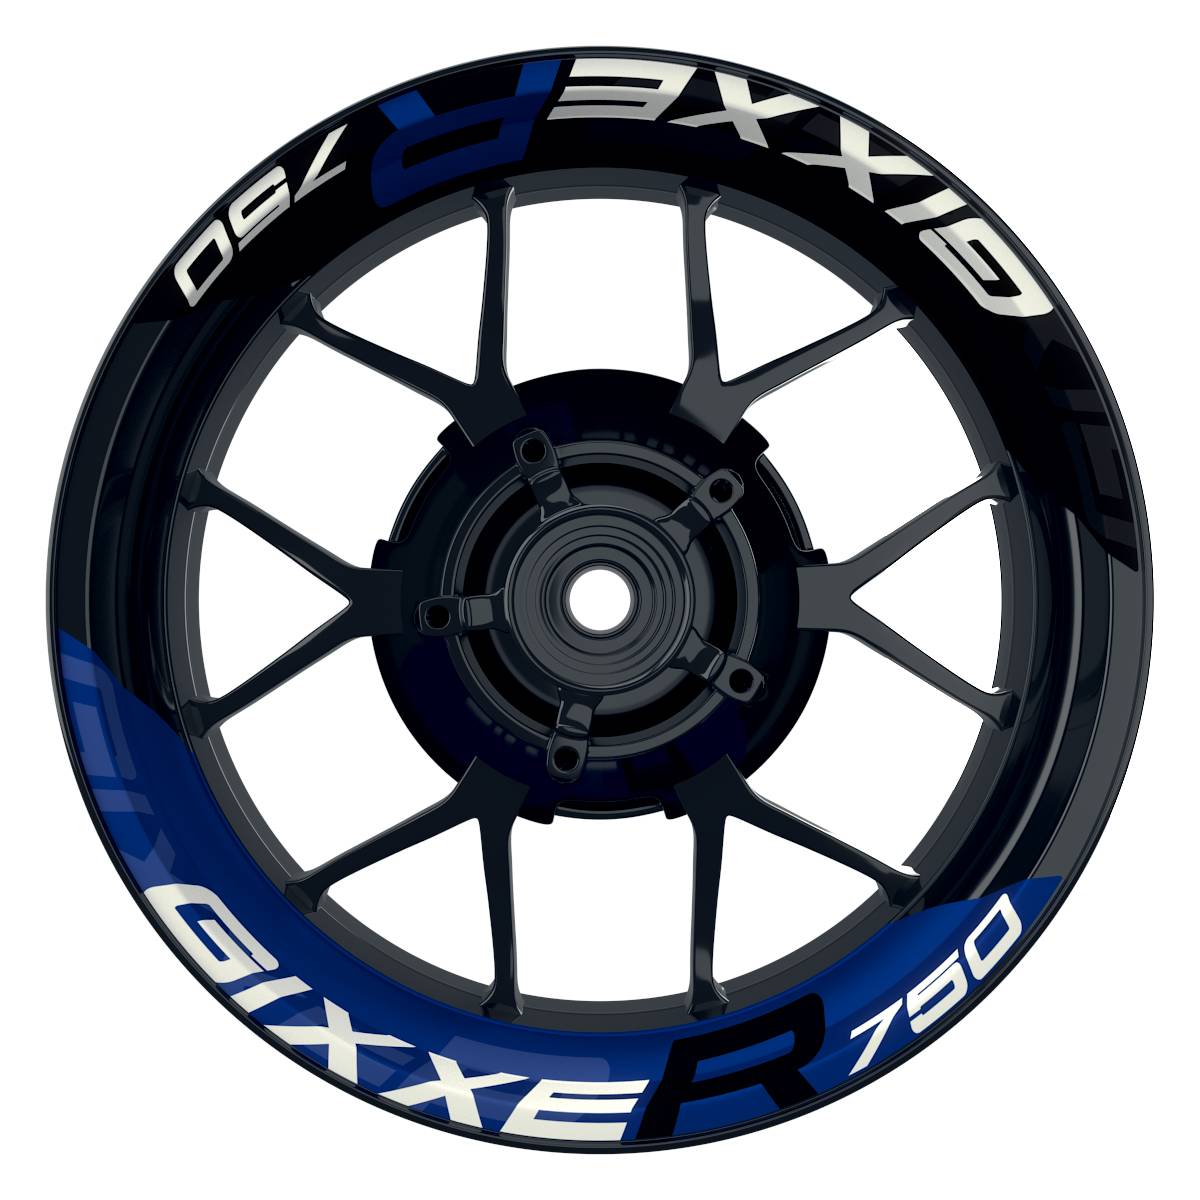 Wheelsticker Felgenaufkleber GIXXER750 halb halb V2 schwarz blau Frontansicht